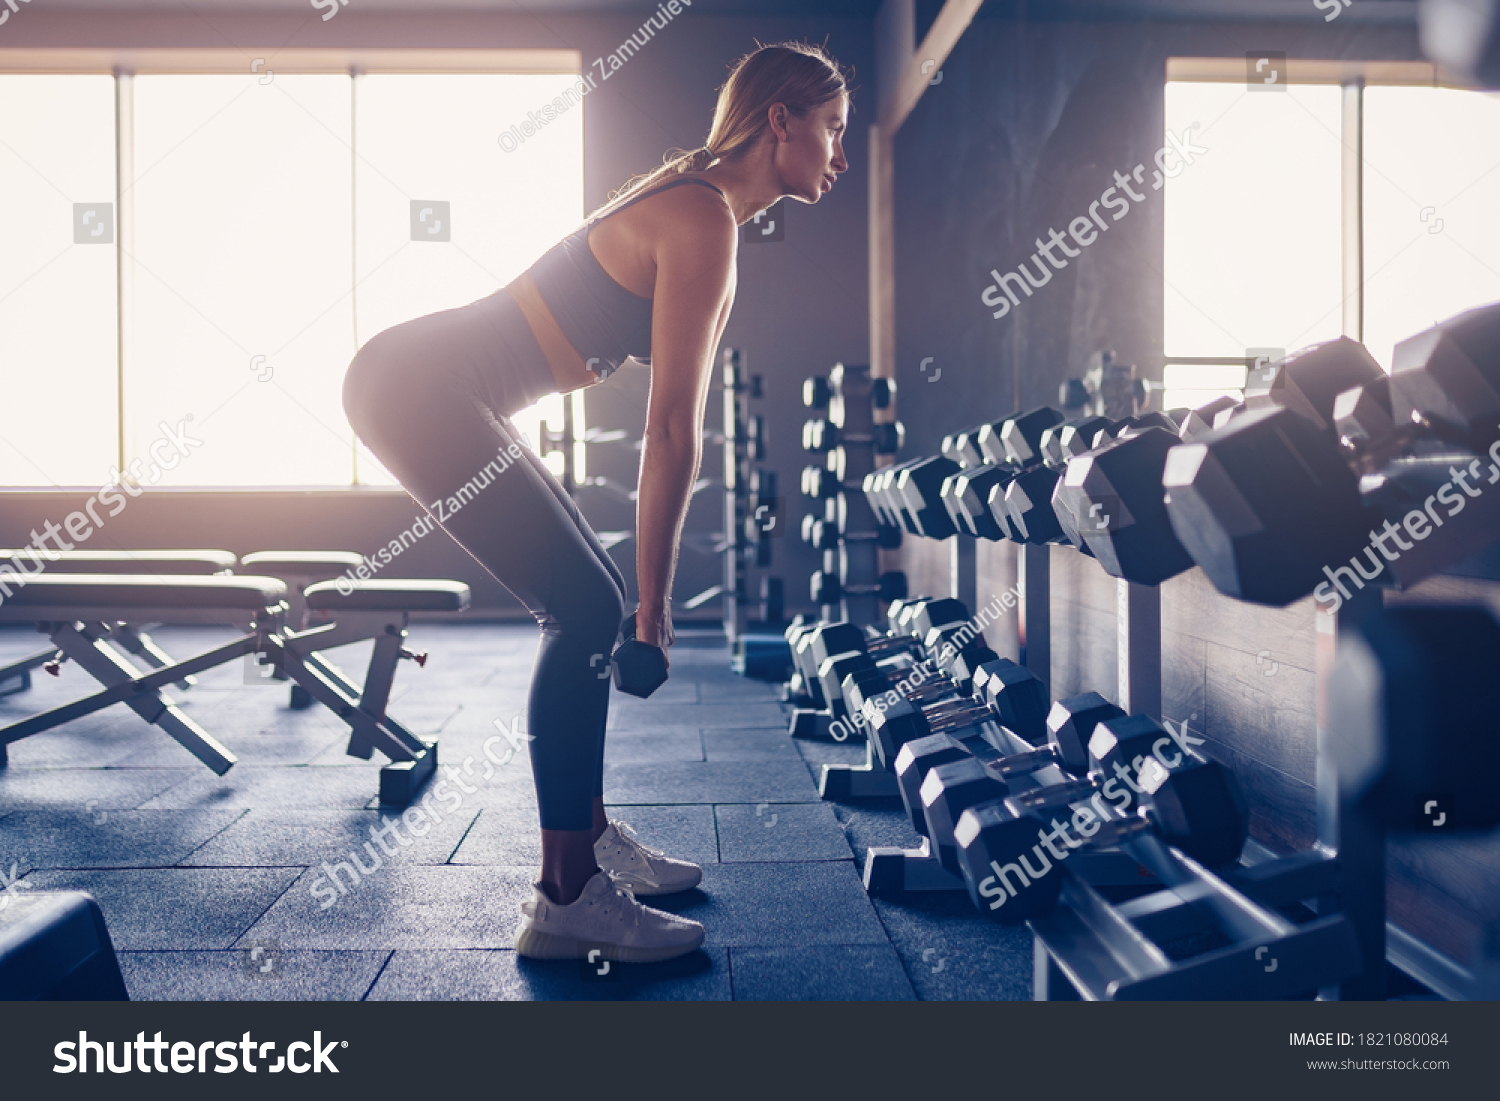 29,006 Gym dumbells Images, Stock Photos & Vectors | Shutterstock